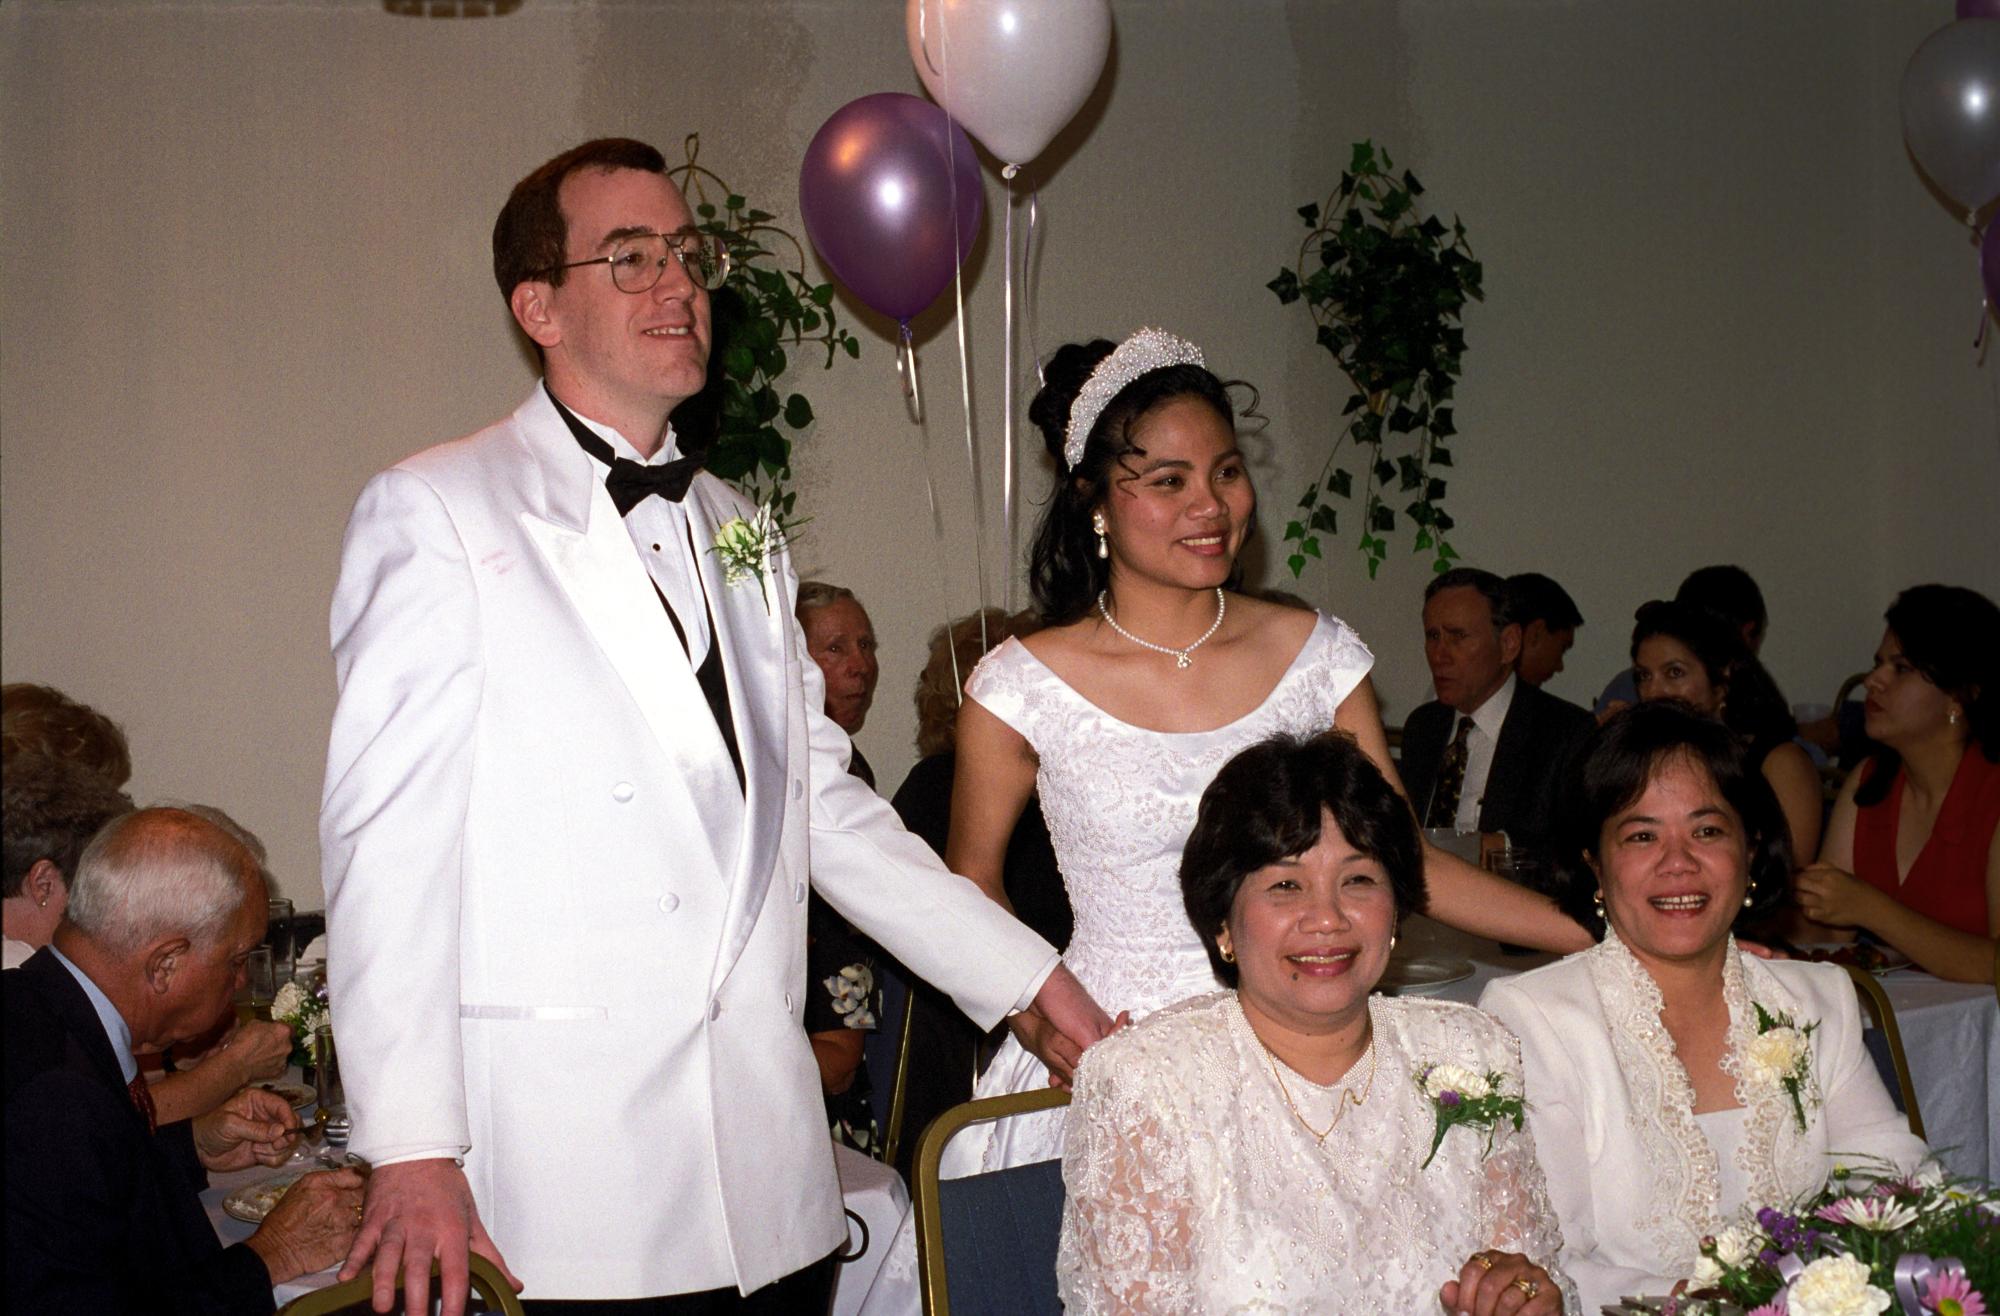 Steve & Janet - Kelly Wedding #5